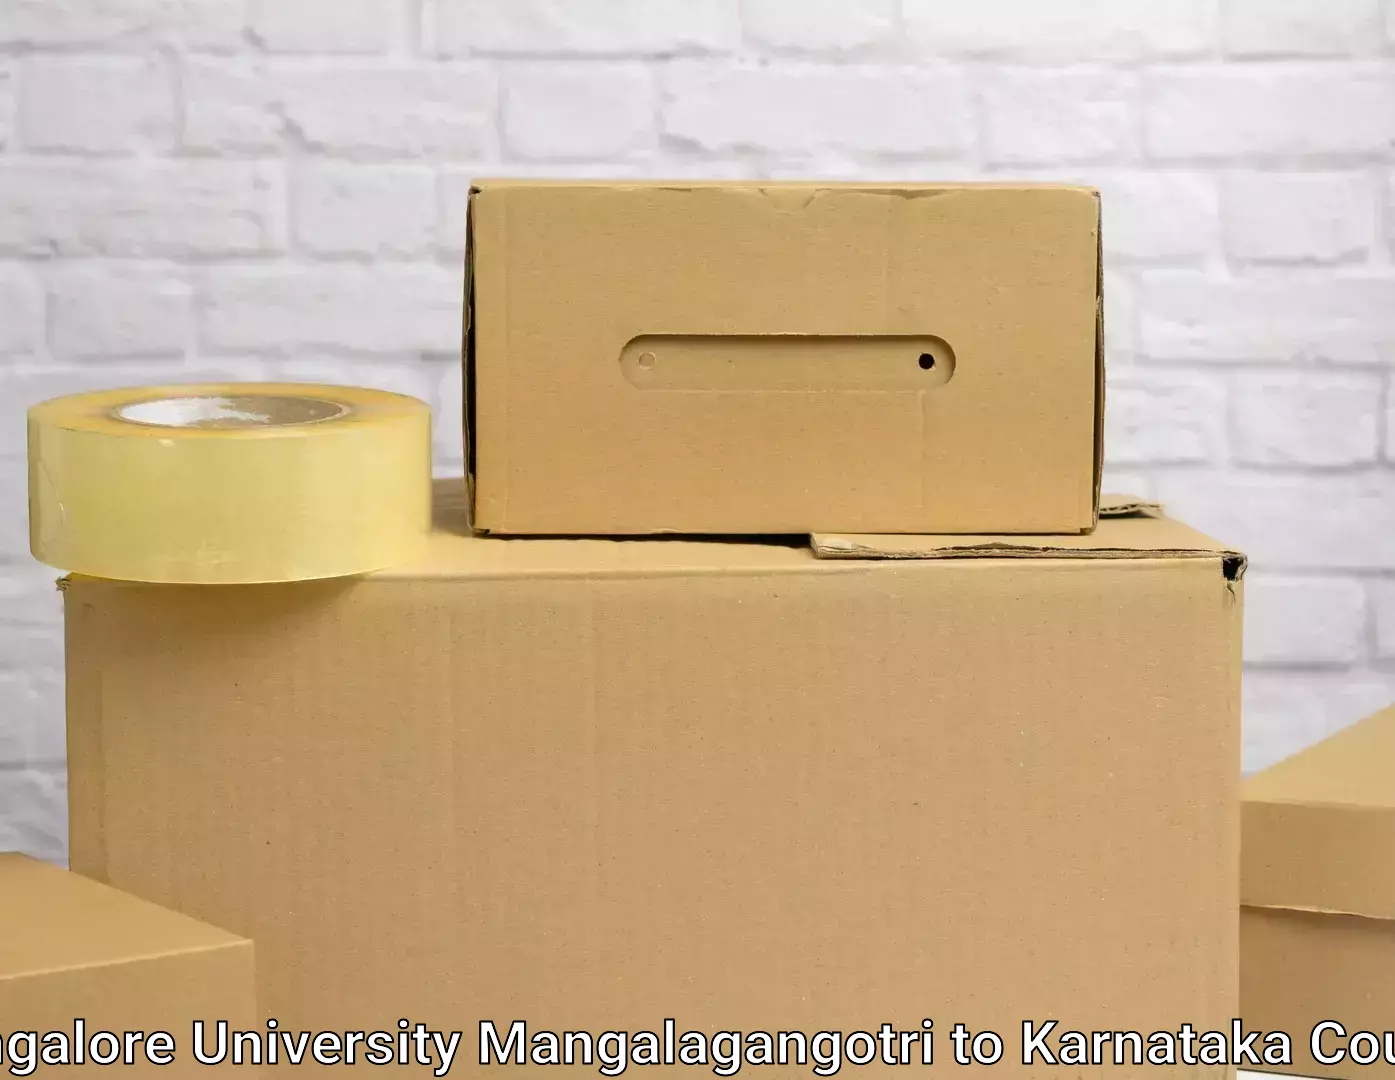 Furniture moving specialists Mangalore University Mangalagangotri to Karnataka